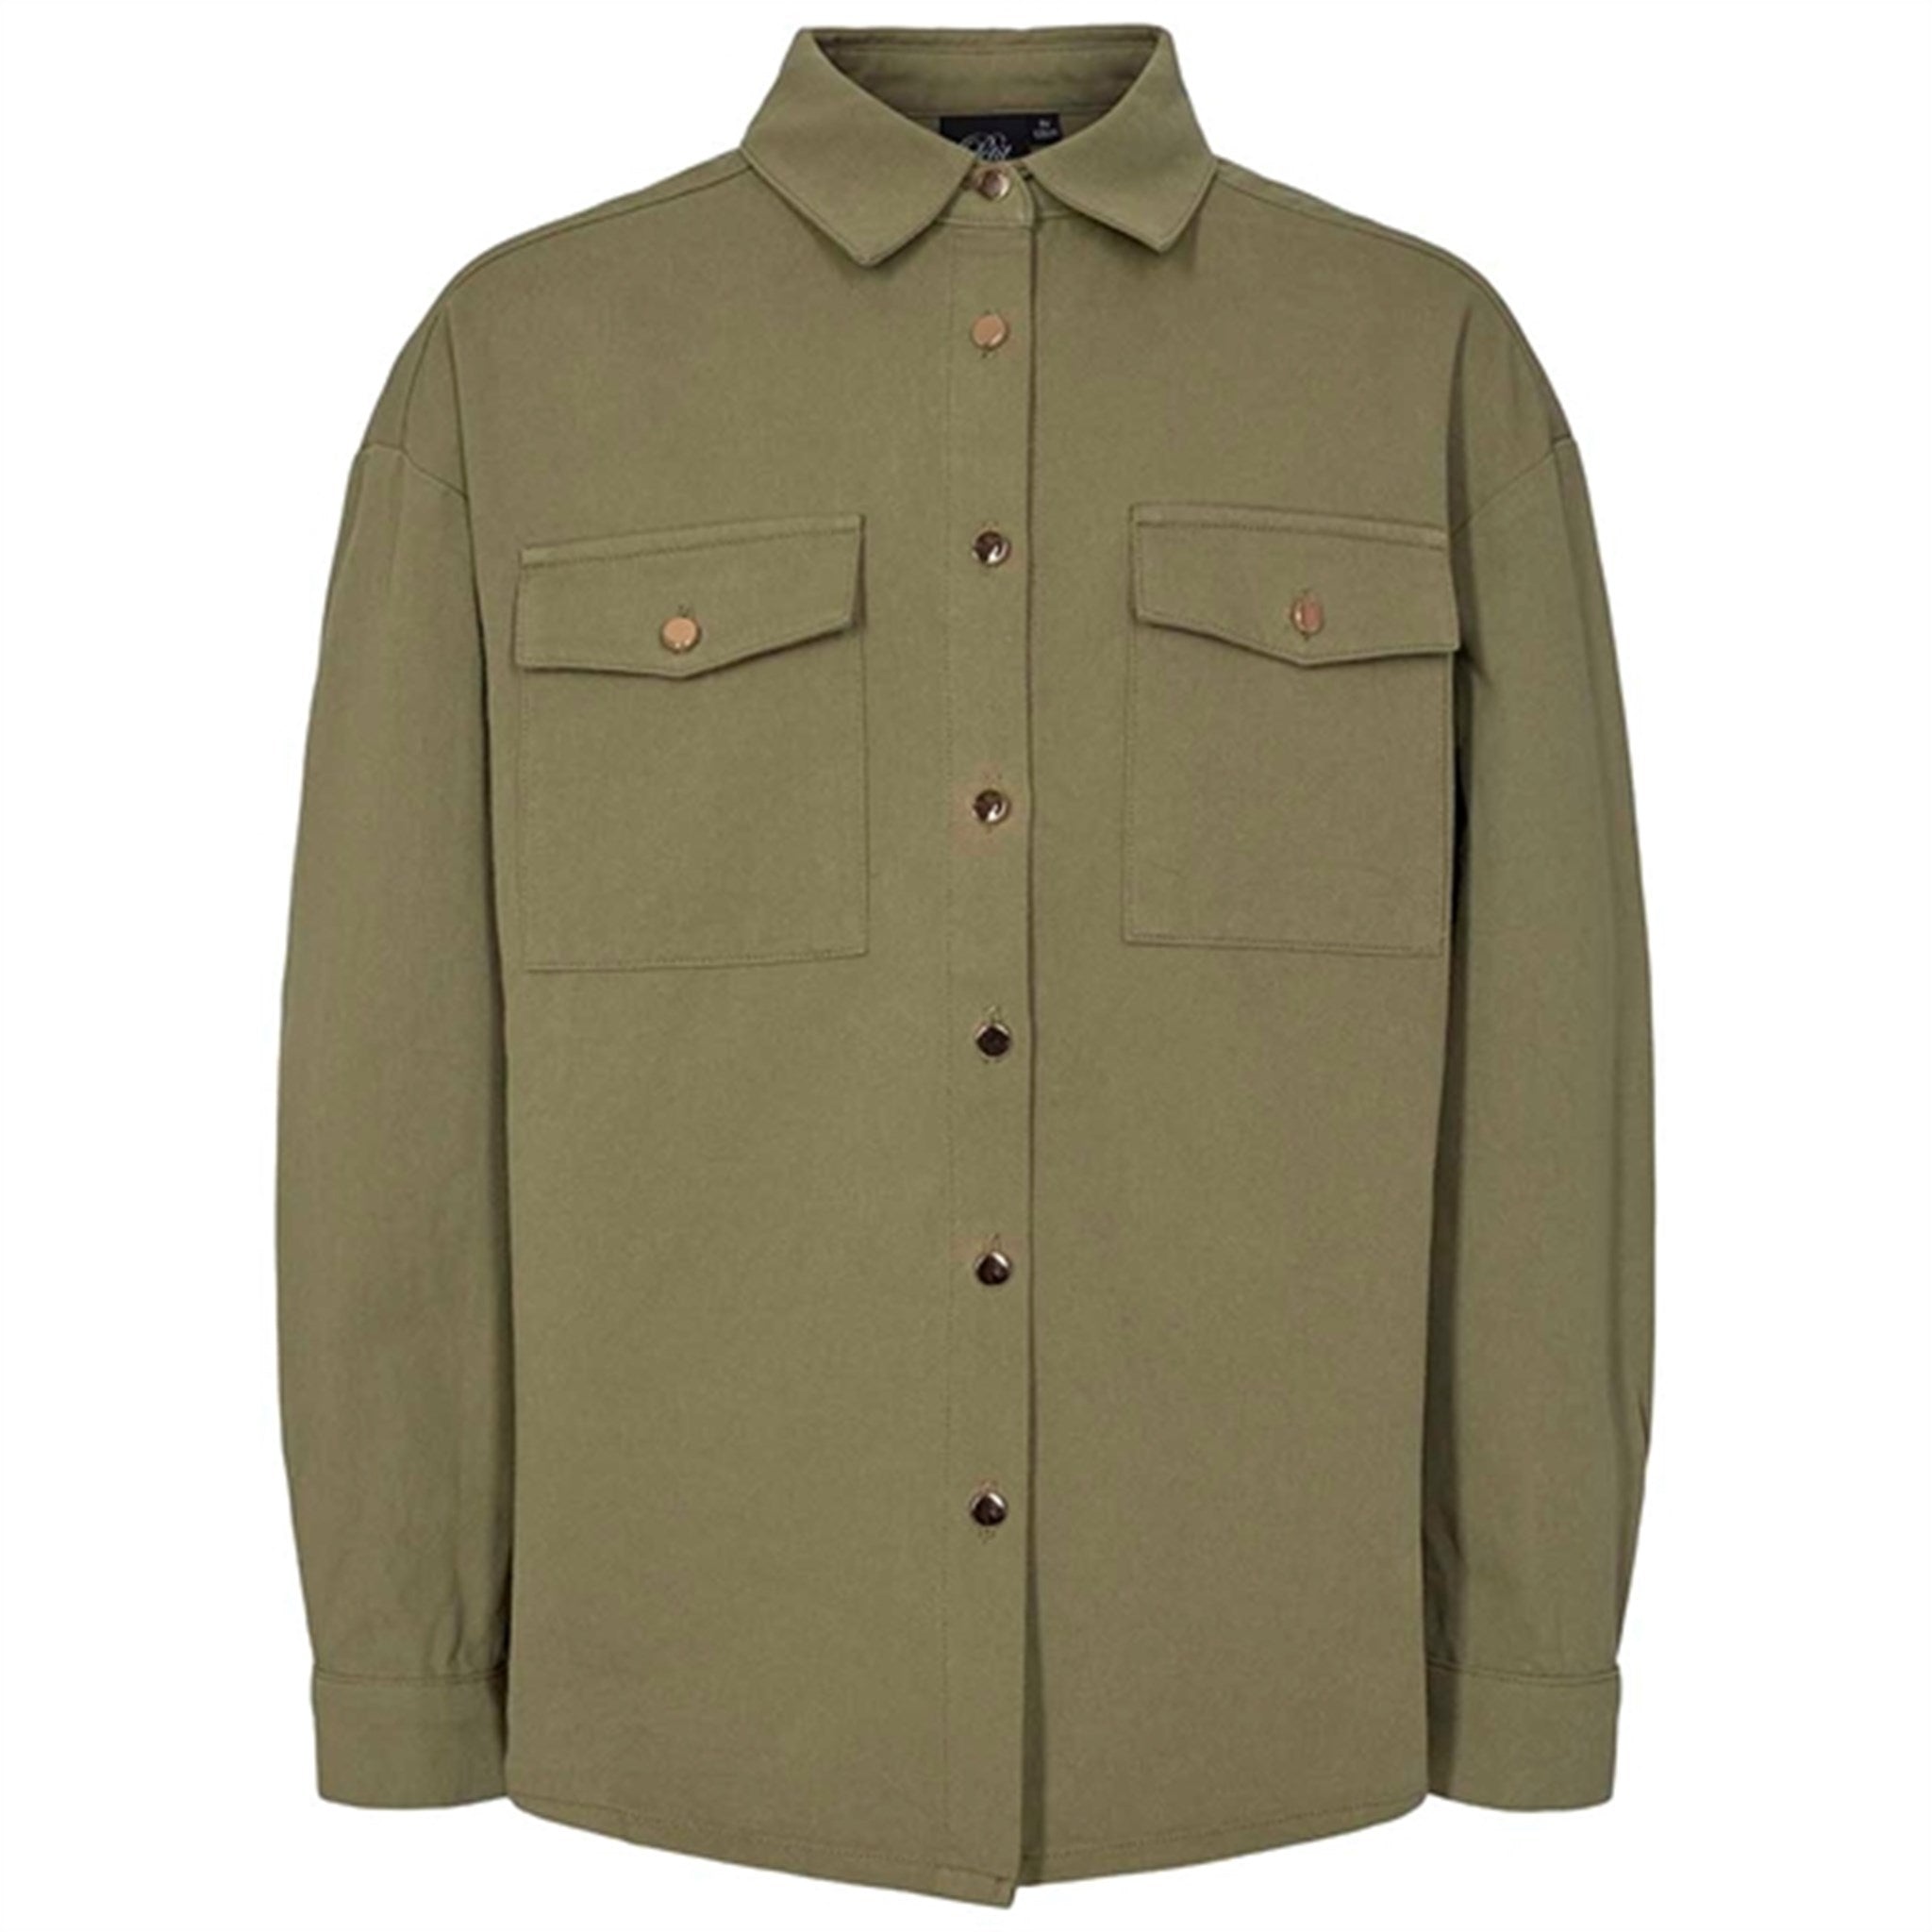 Sofie Schnoor Army Green Skjorte - Str. 6 år/116 cm